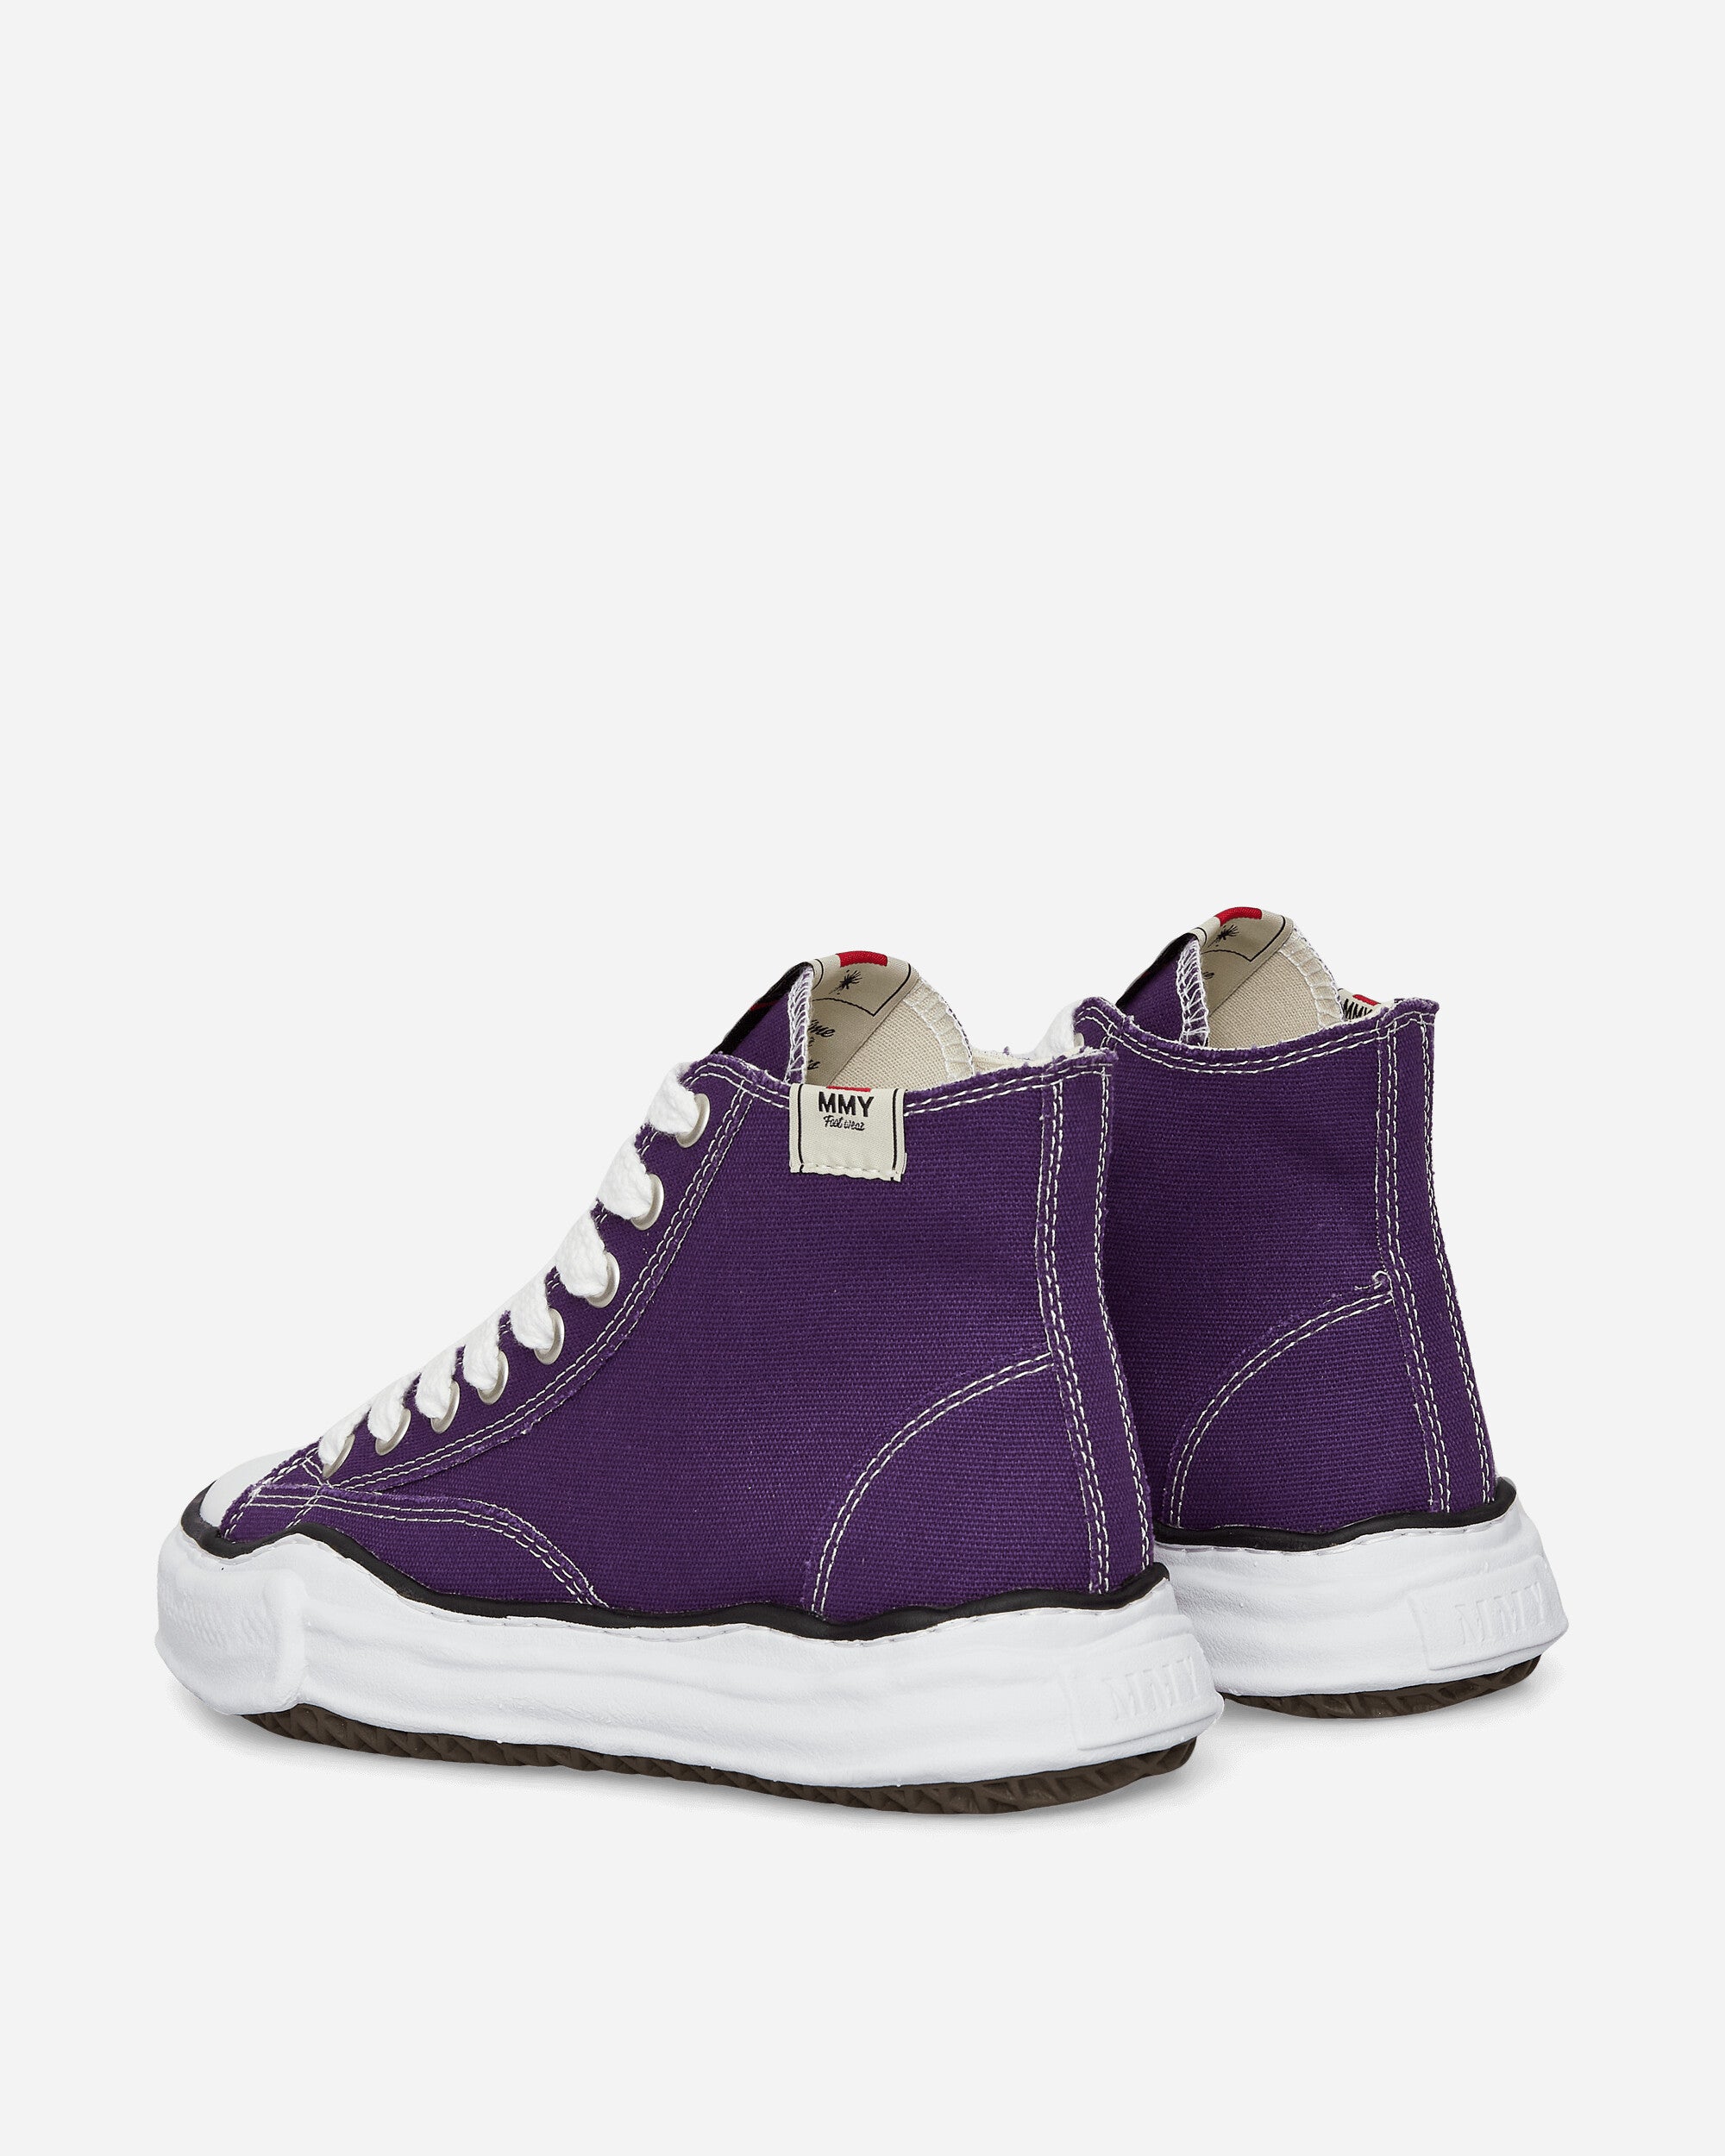 Maison MIHARA YASUHIRO Peterson High/Original Sole Canvas High-Top Sneaker Purple Sneakers Low A01FW701 PURPLE